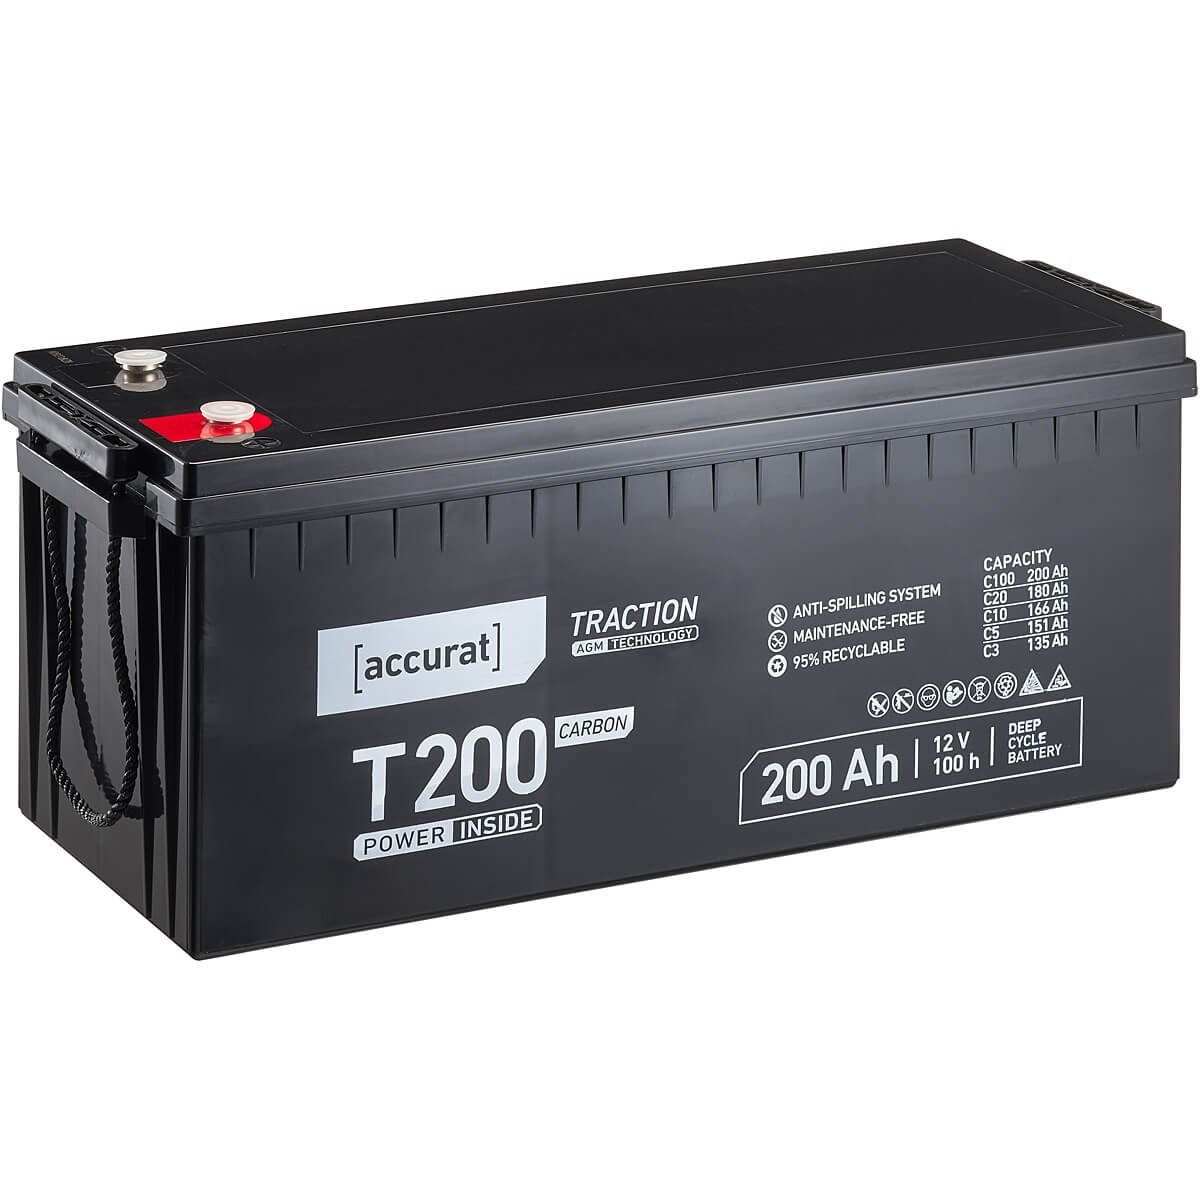 accurat 200Ah 12V AGM Carbon Batterie für Solaranlagen Batterie, (12 V)